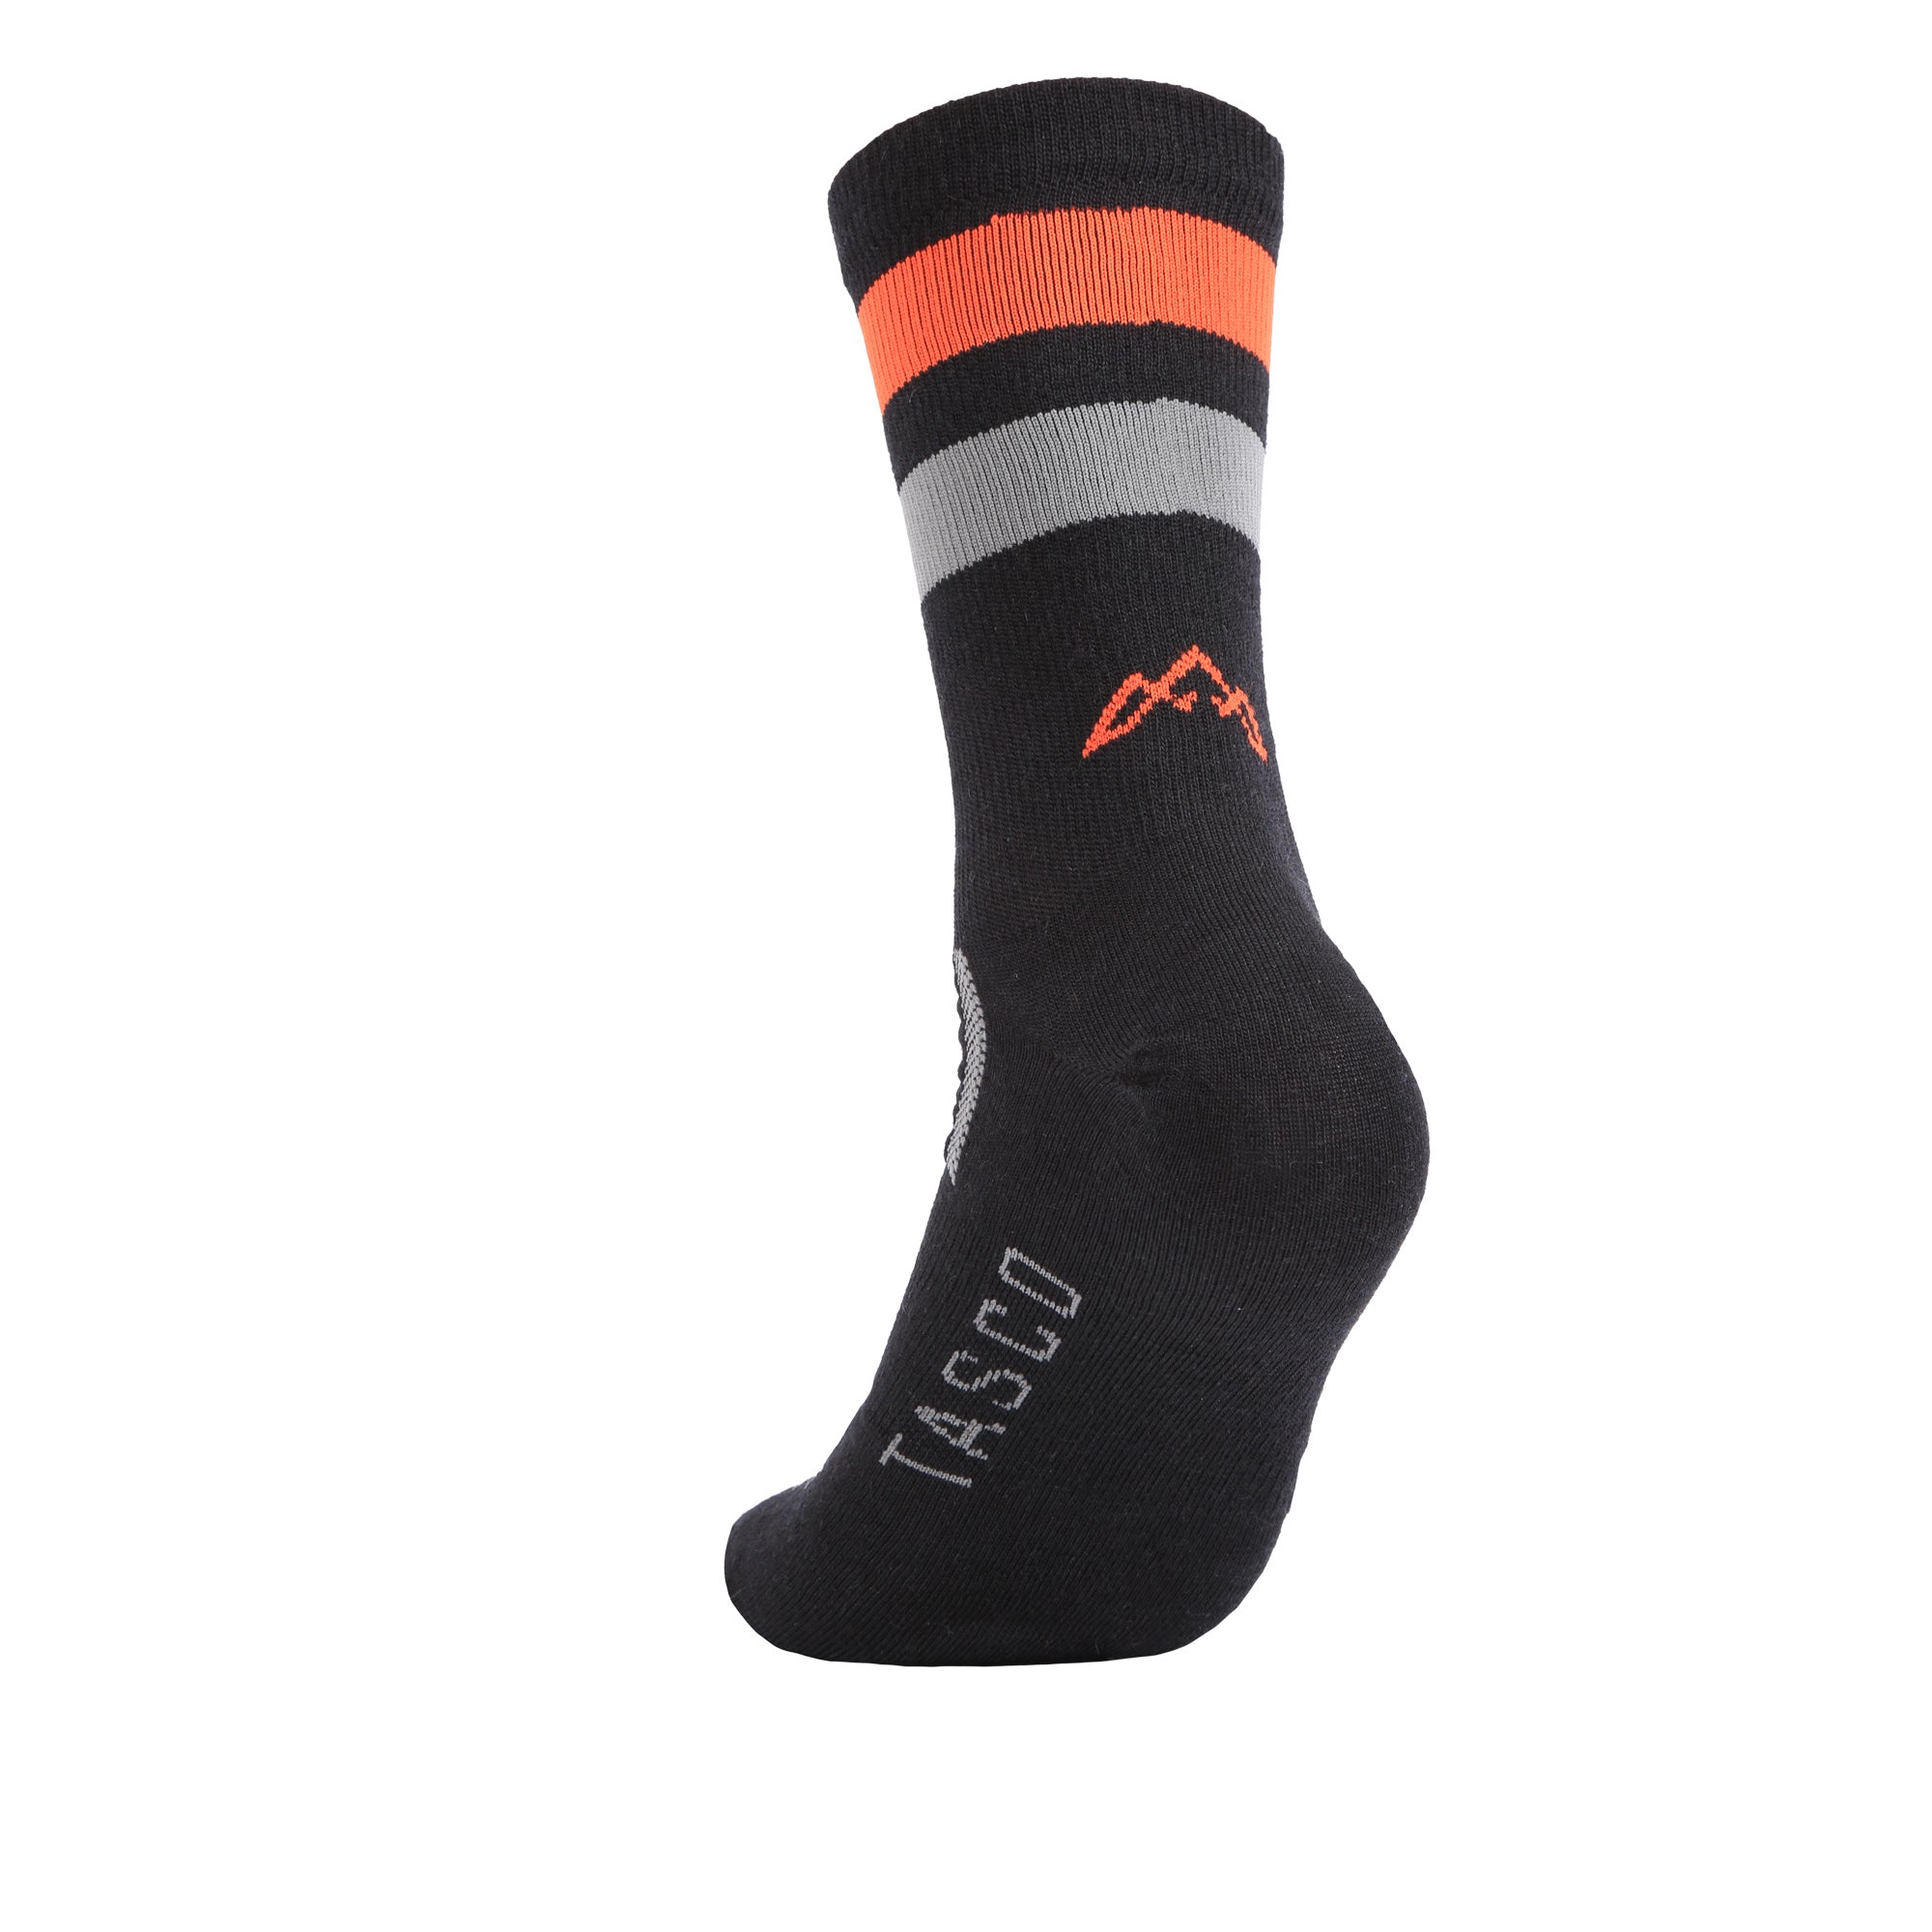 RideTrek Merino Wool Socks - Classic Black / Orange